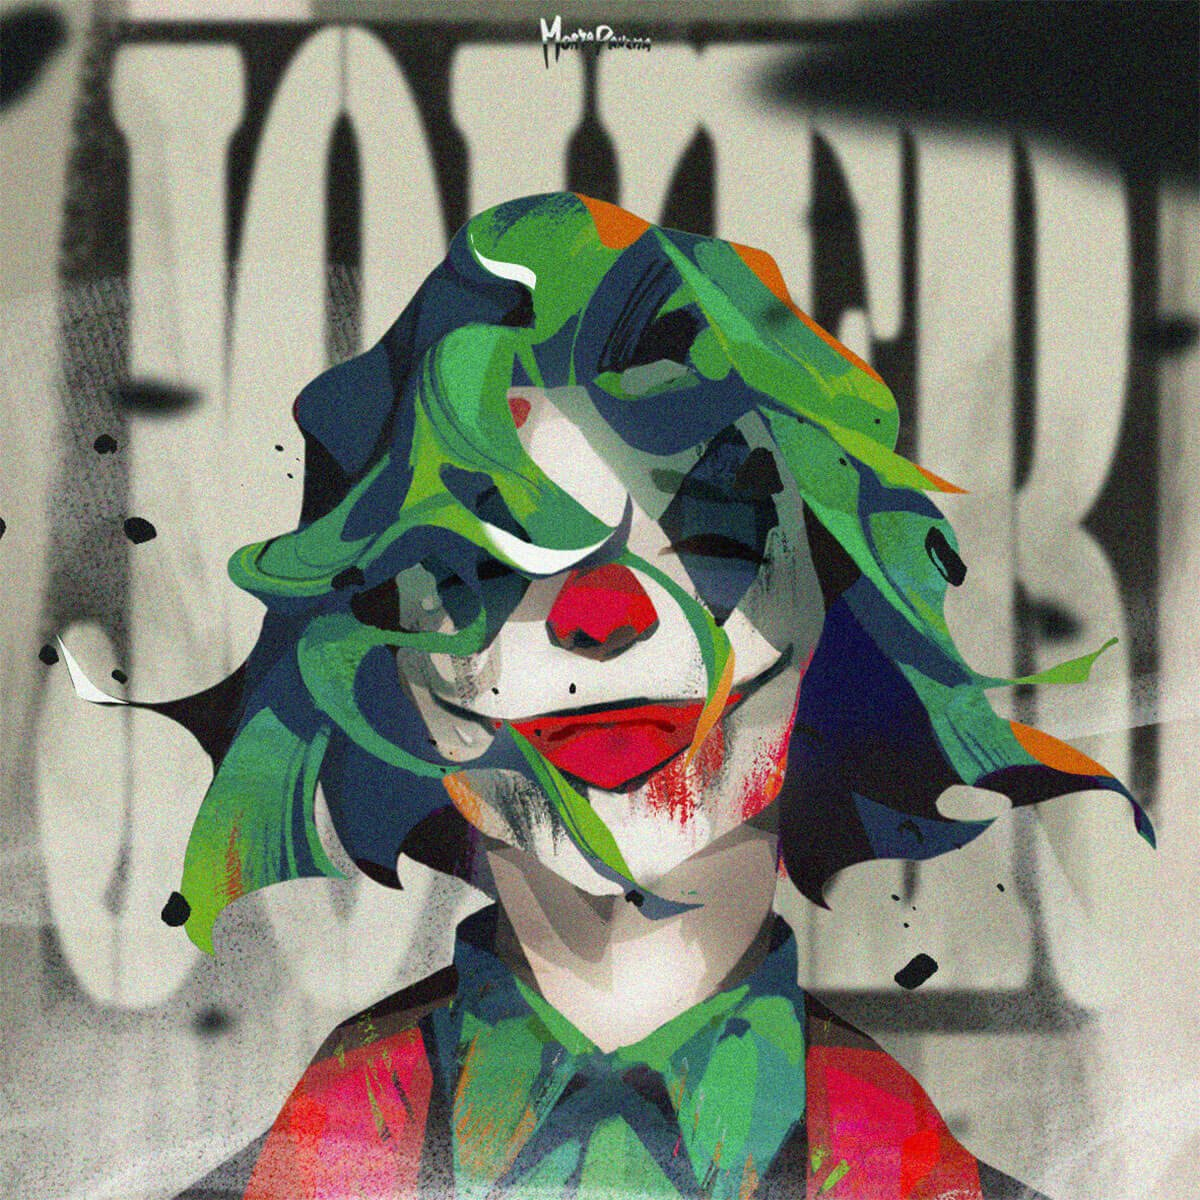 Joker Art Collection To Put A Smile On Your Face - The innen Joker Dessin Coloriage Joker 2019